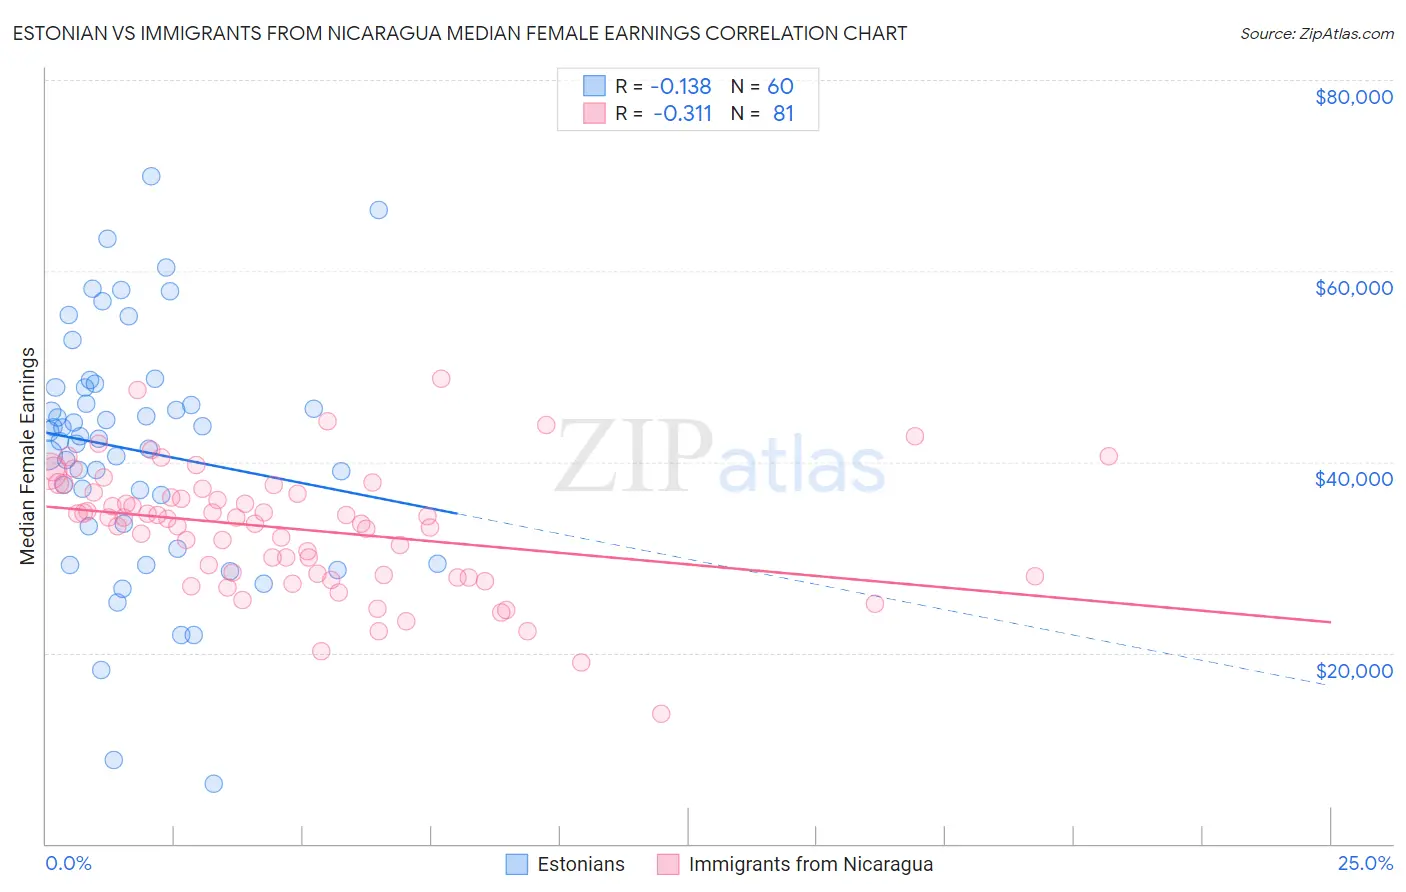 Estonian vs Immigrants from Nicaragua Median Female Earnings